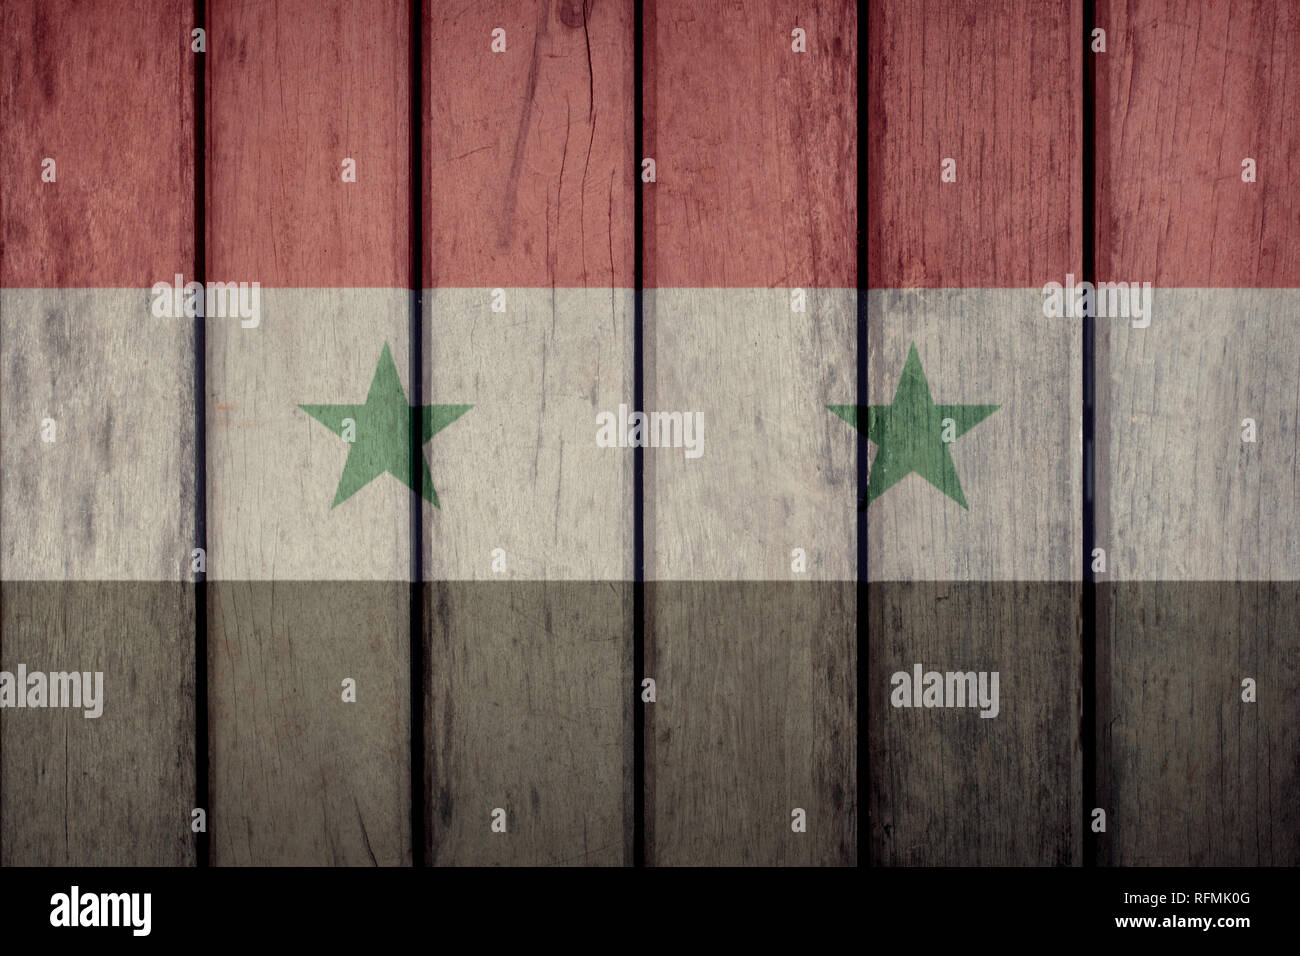 Syria Politics News Concept: Syrian Flag Wooden Fence Stock Photo